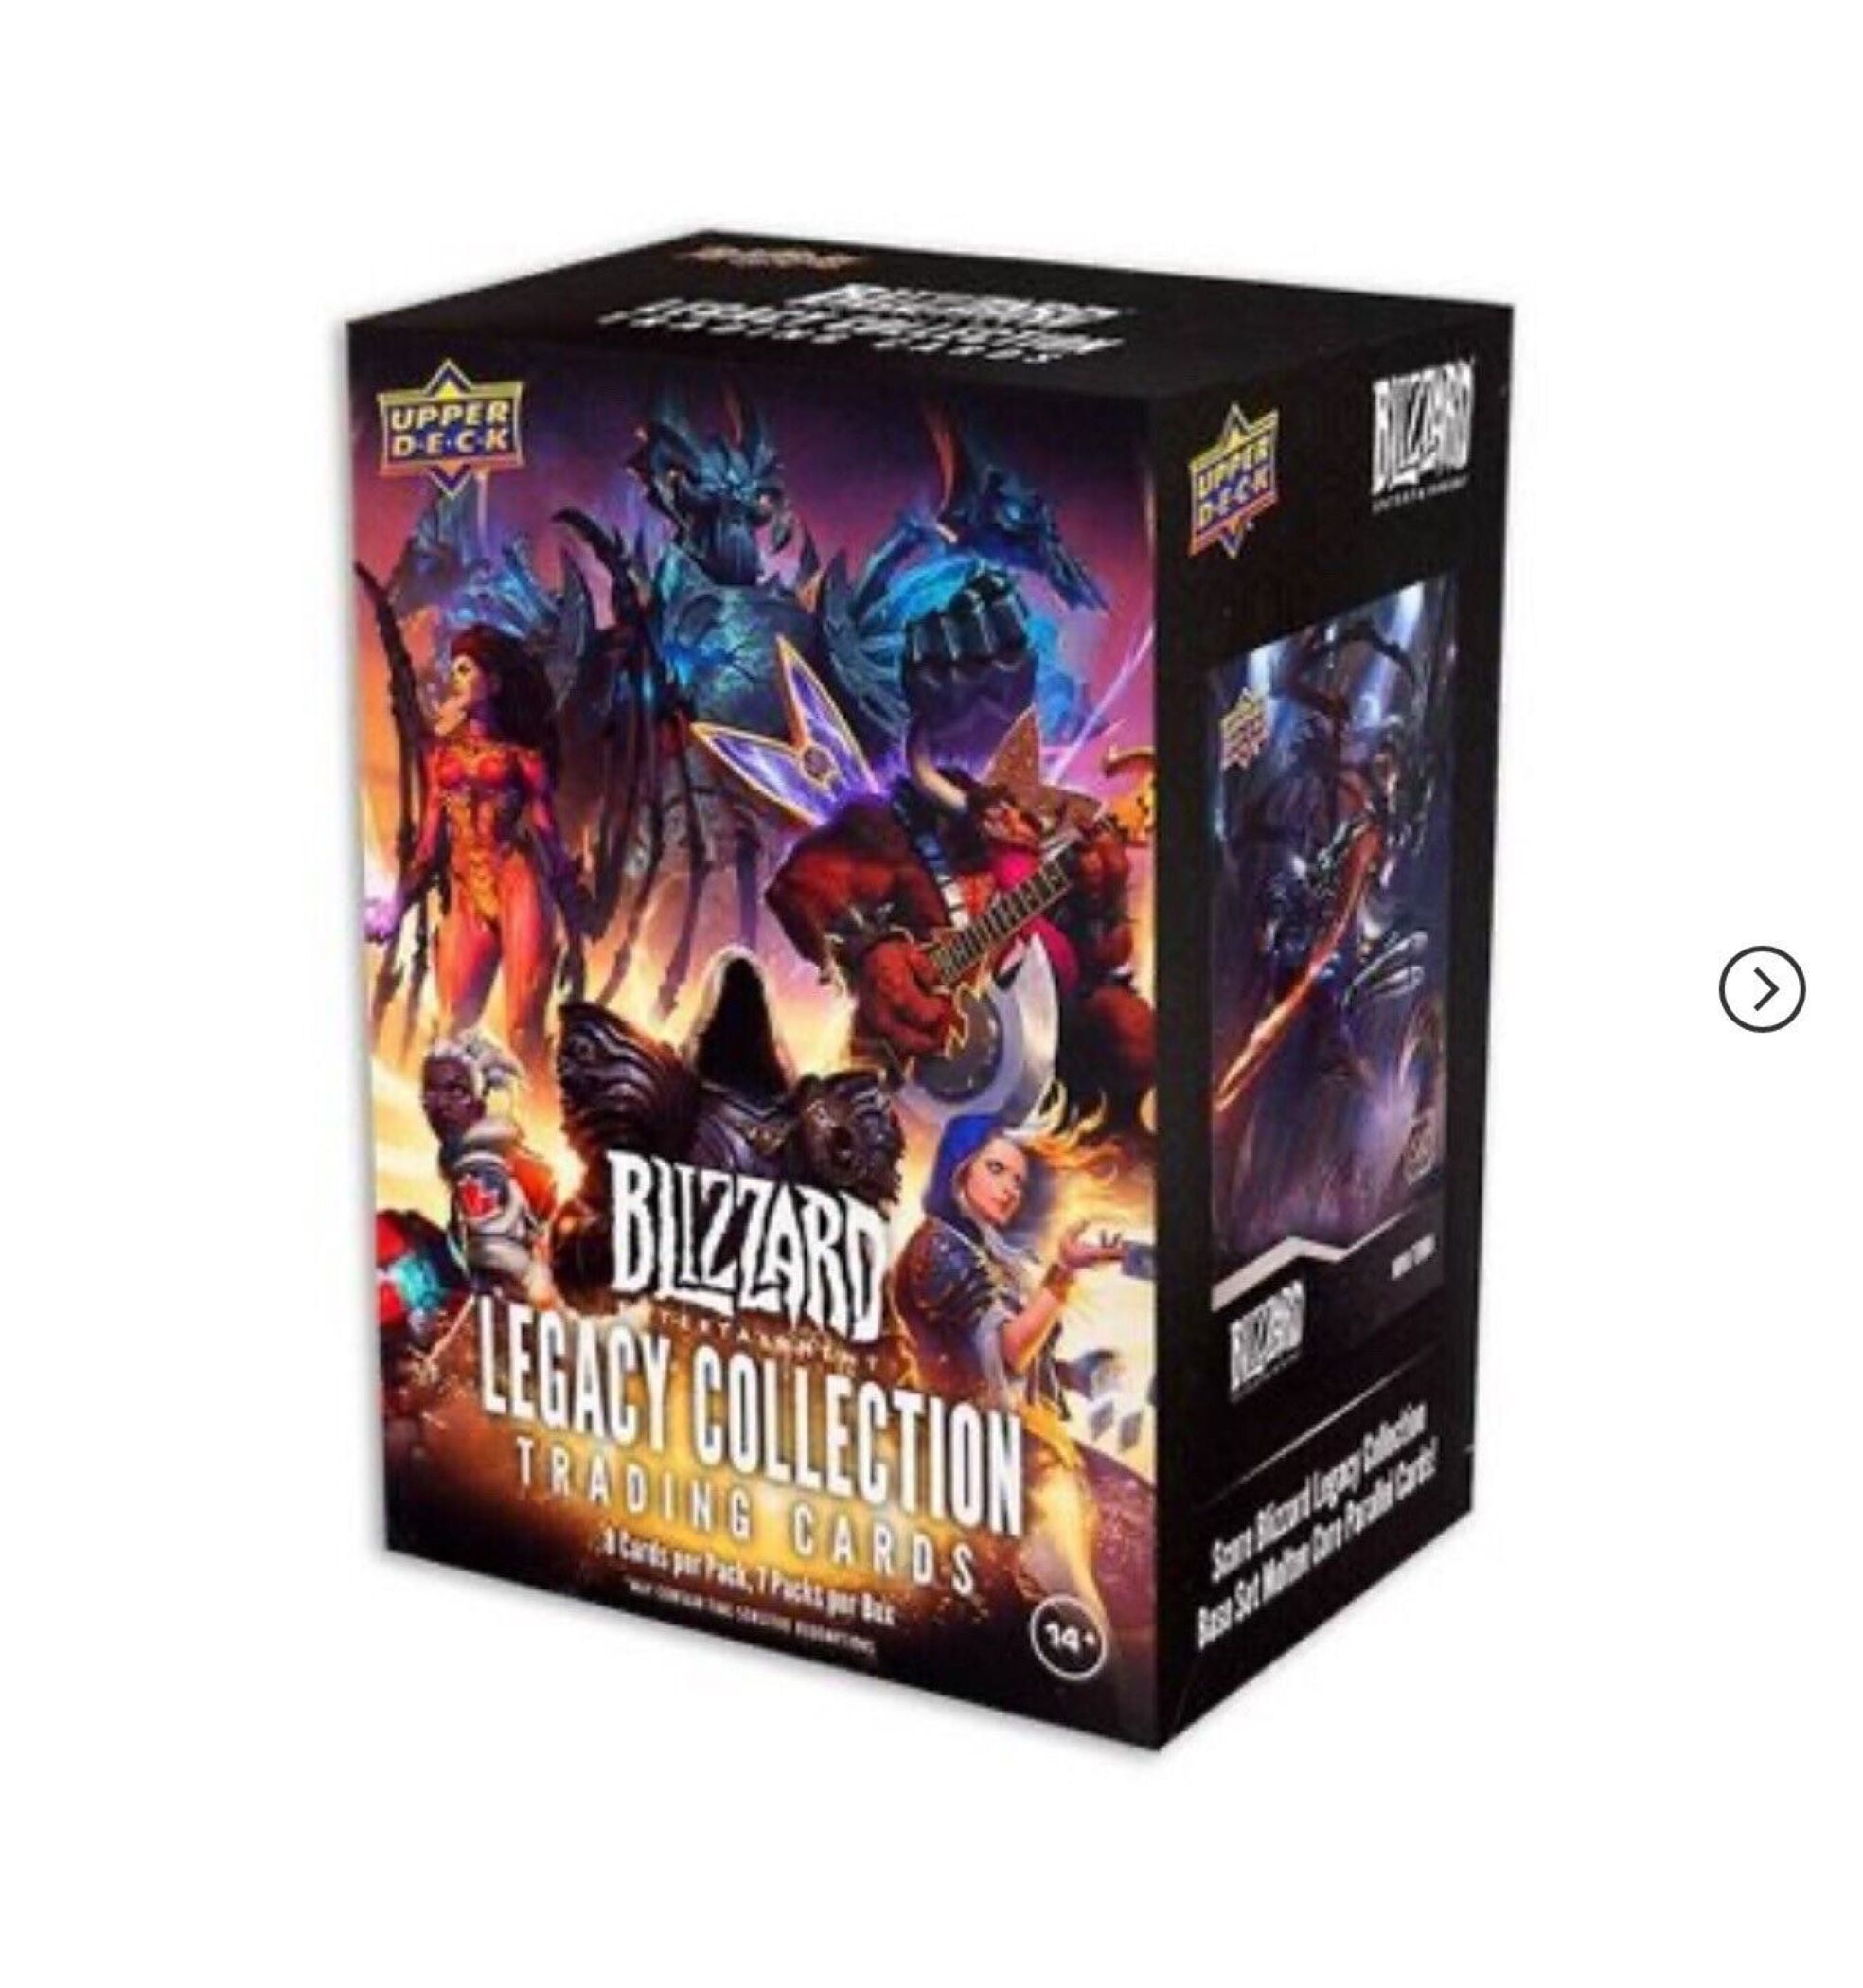 Upper Deck Blizzard Entertainment Blizzard Legacy Collection Box